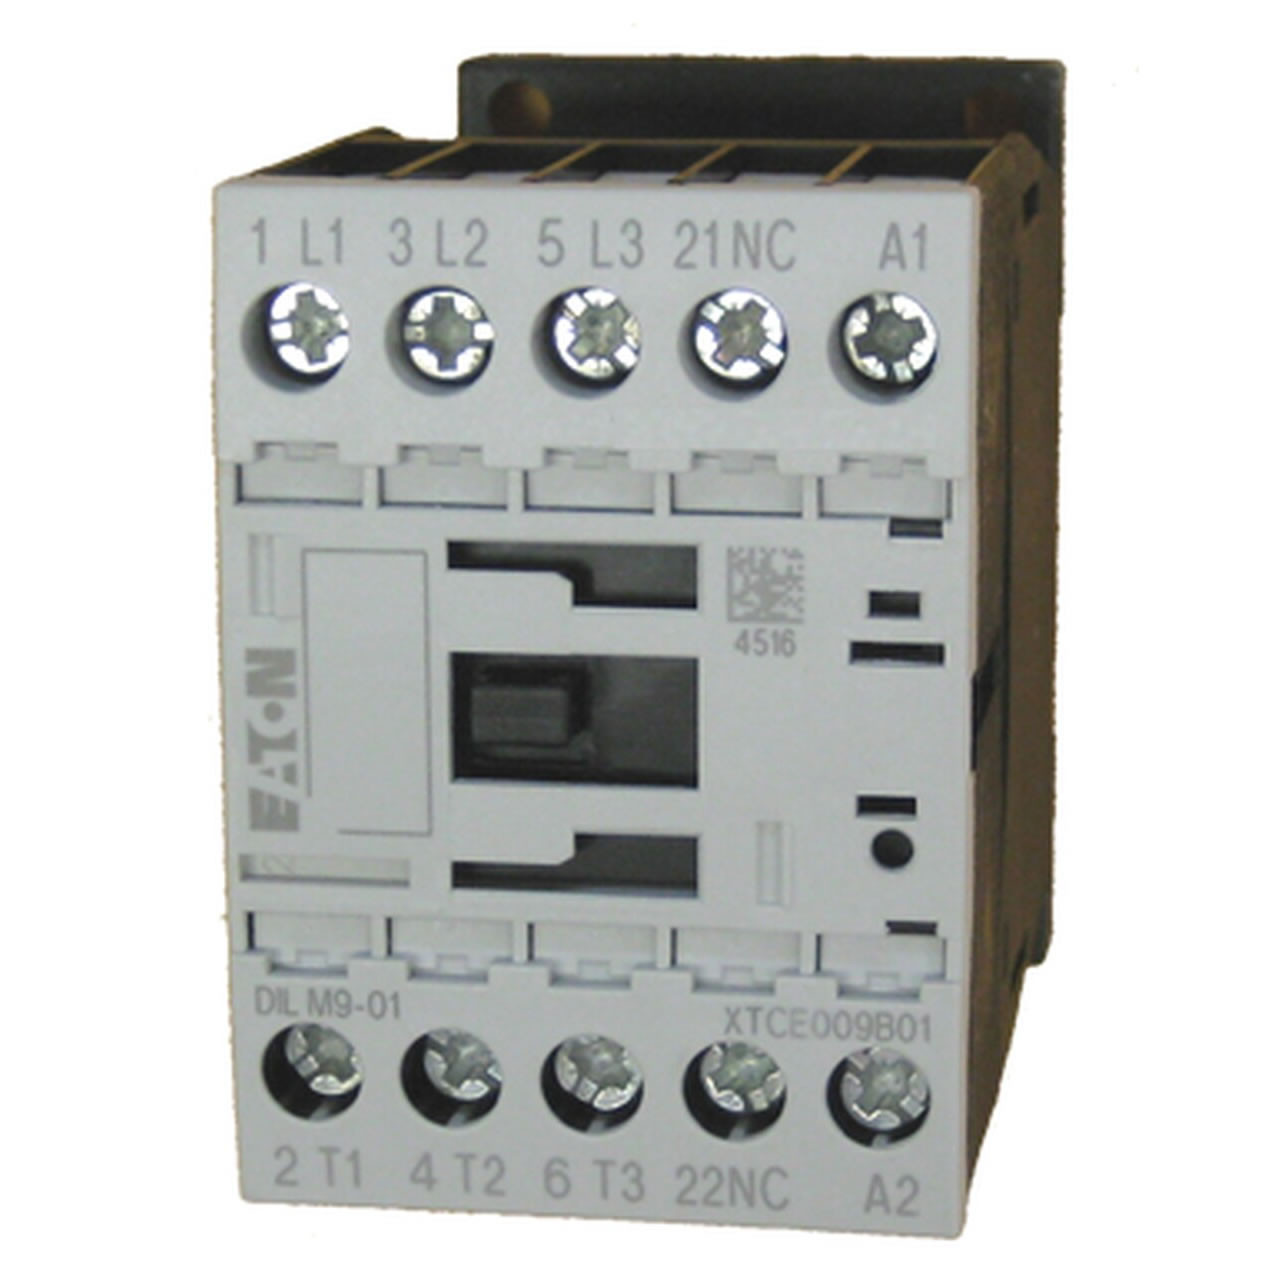 Eaton/Moeller DILM9-01 600 volt AC contactor